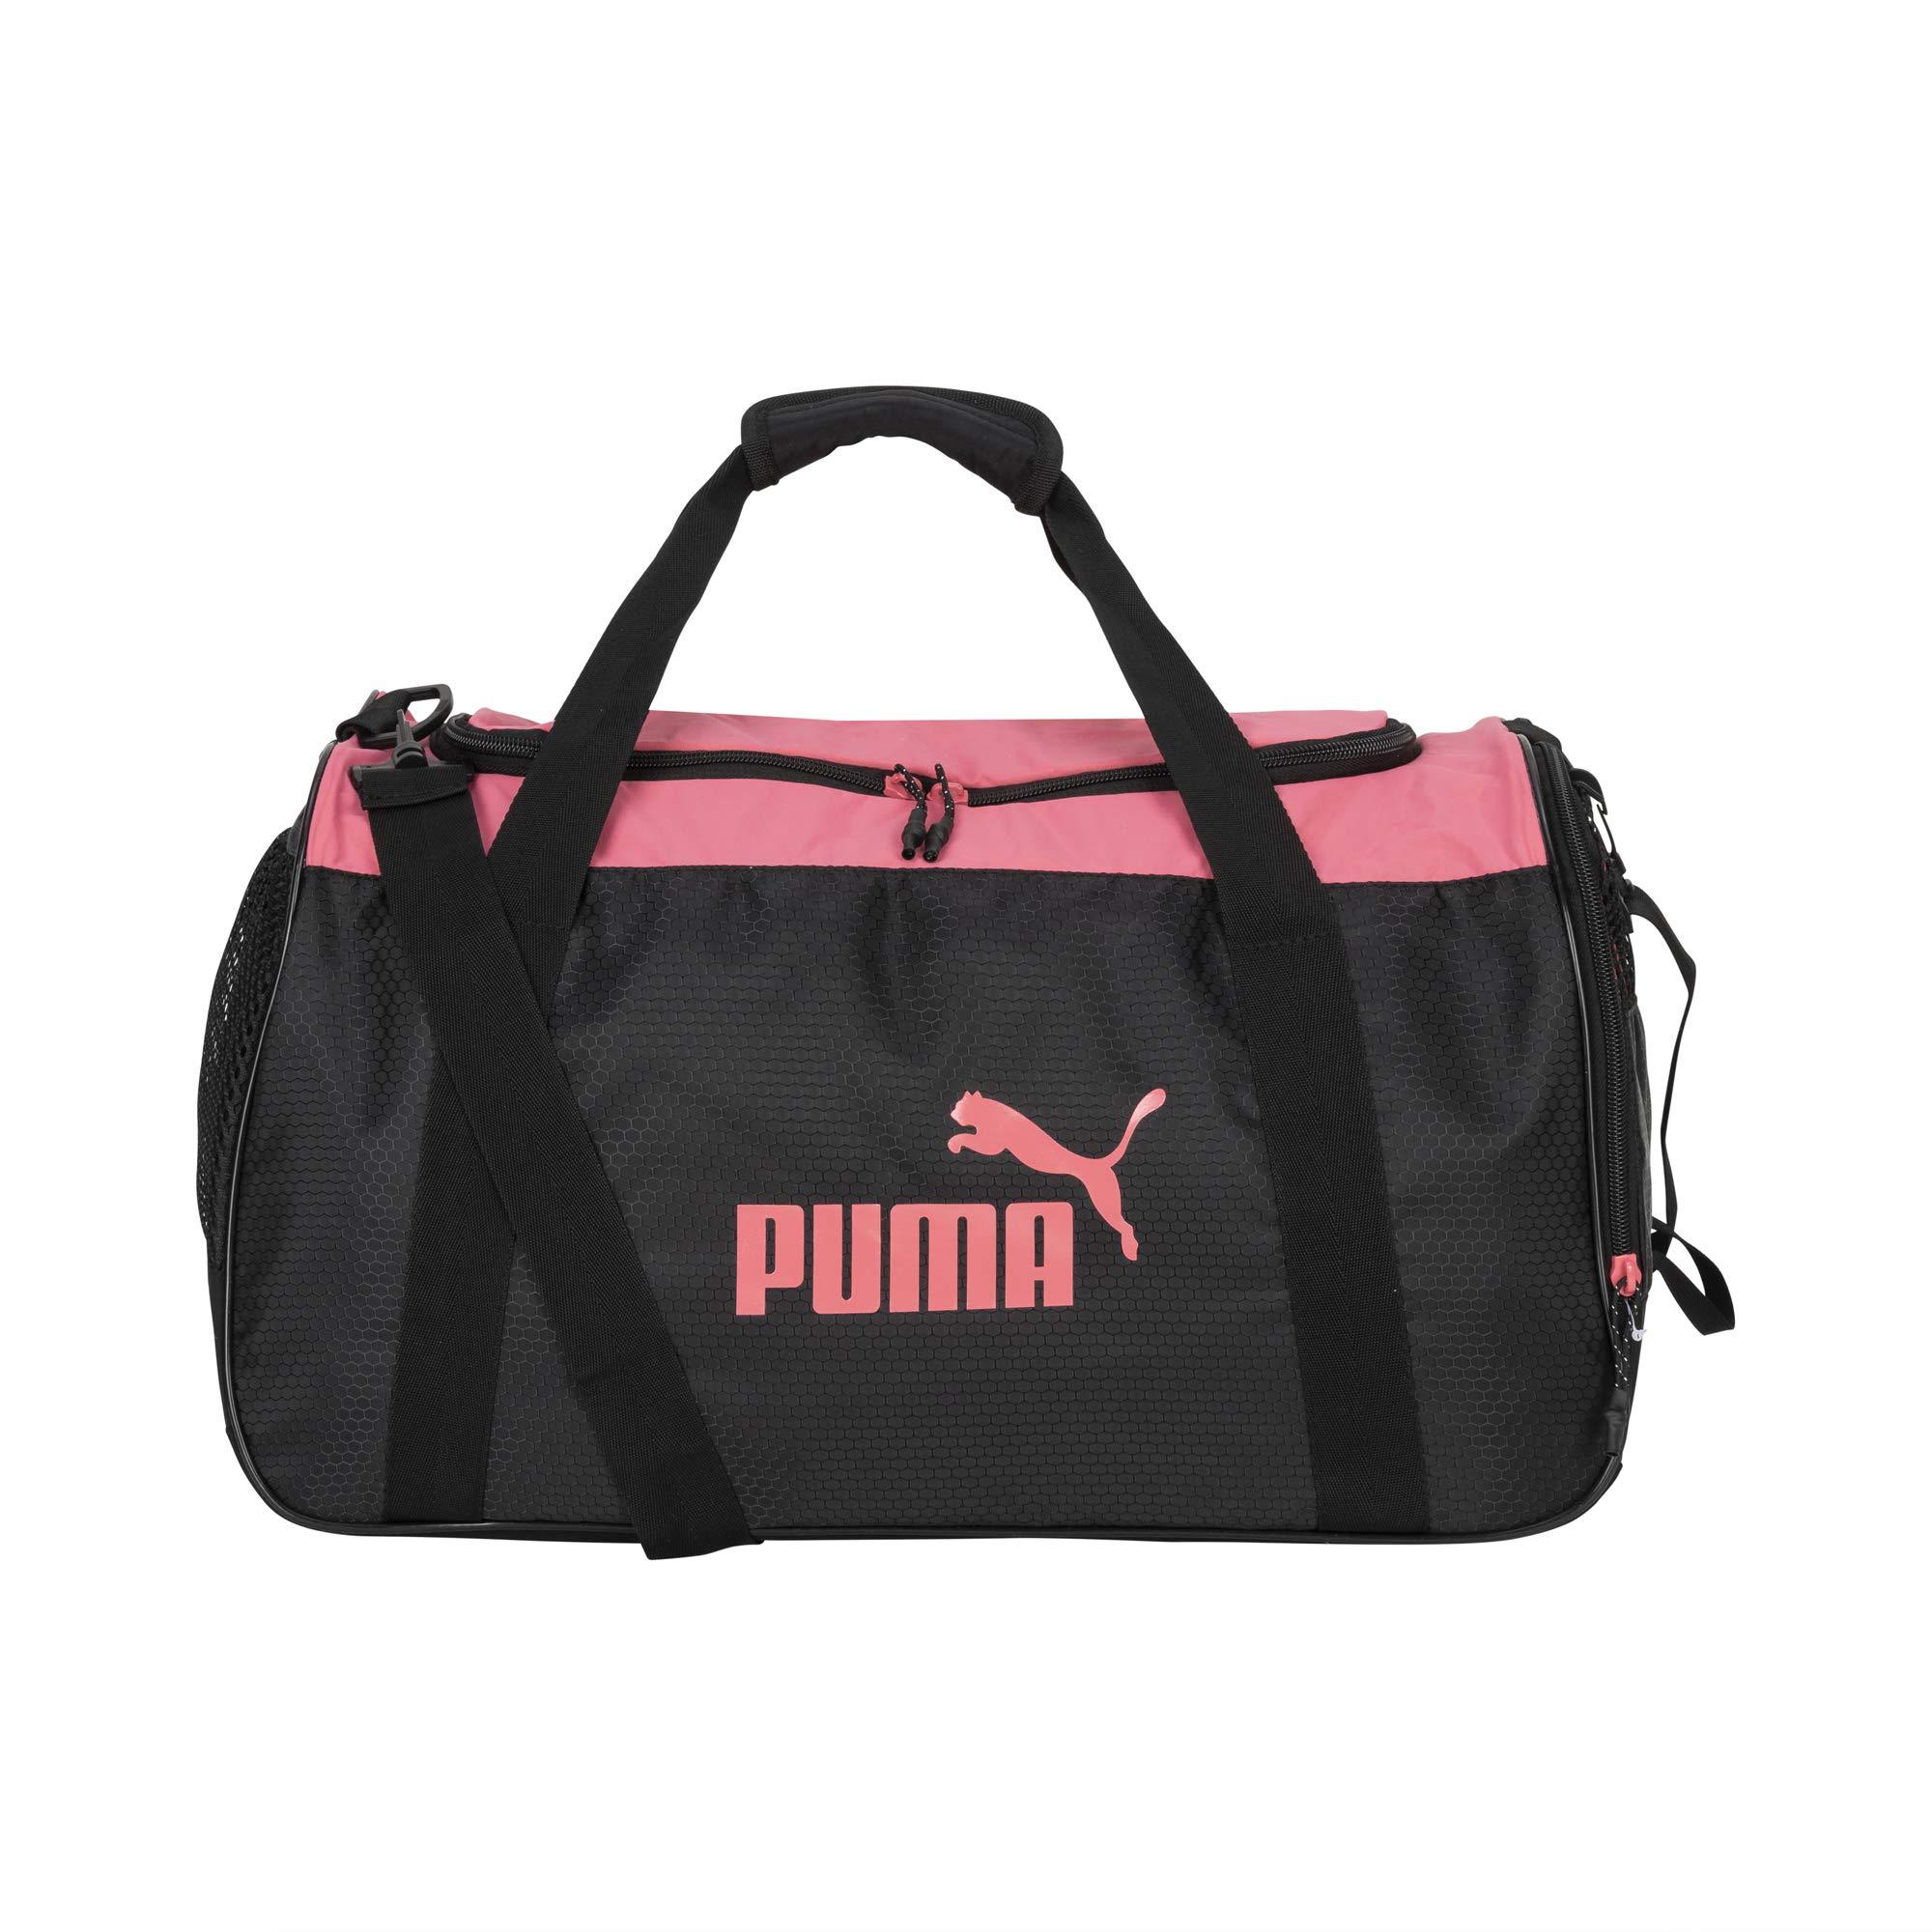 PUMA Defense Duffel Bag in Black Combo (Black) - Lyst